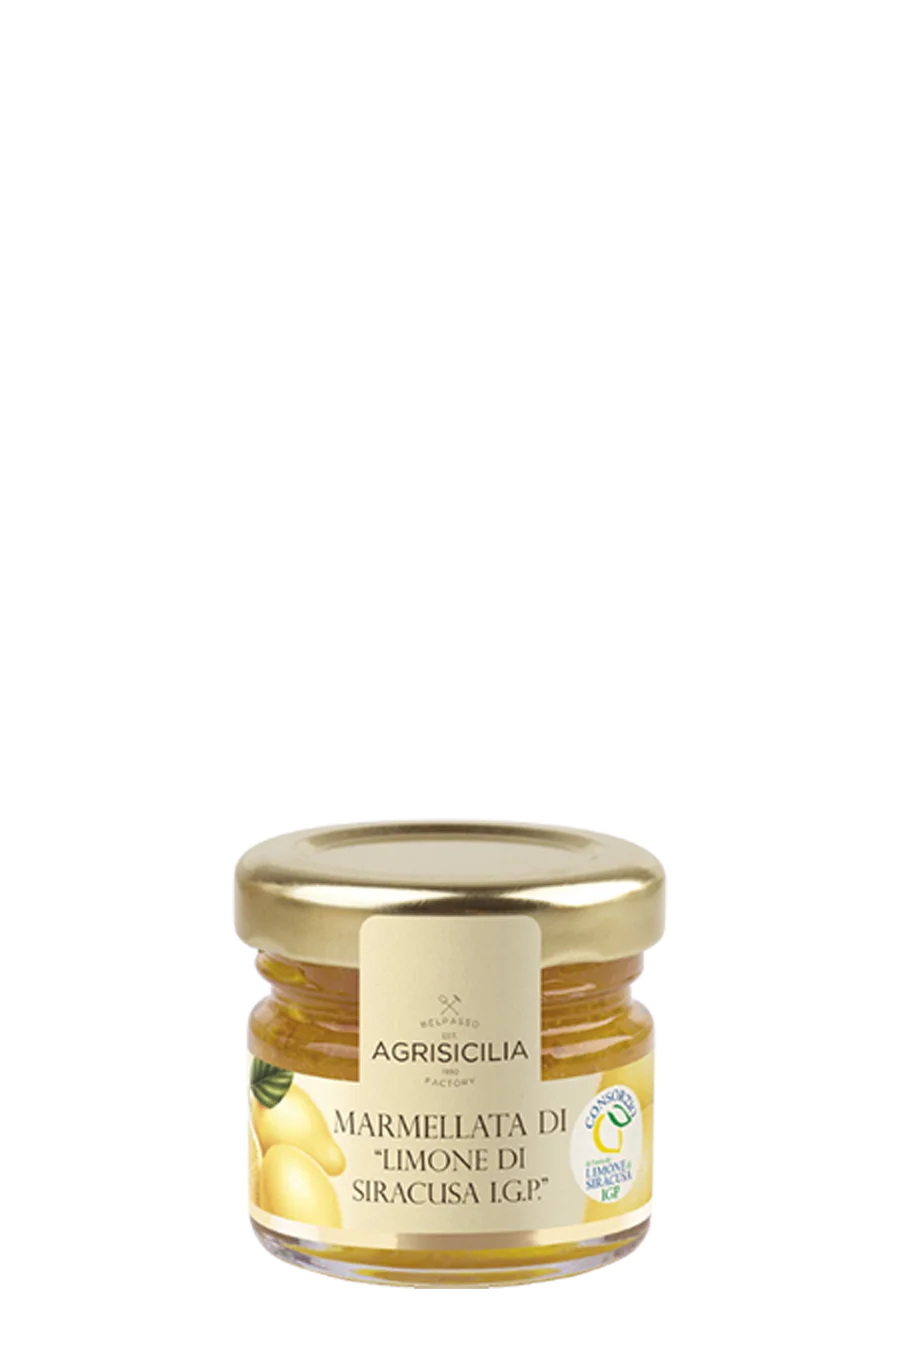 Single-serving jar of Syracuse P.G.I. Lemon Jam by AGRISICILIA